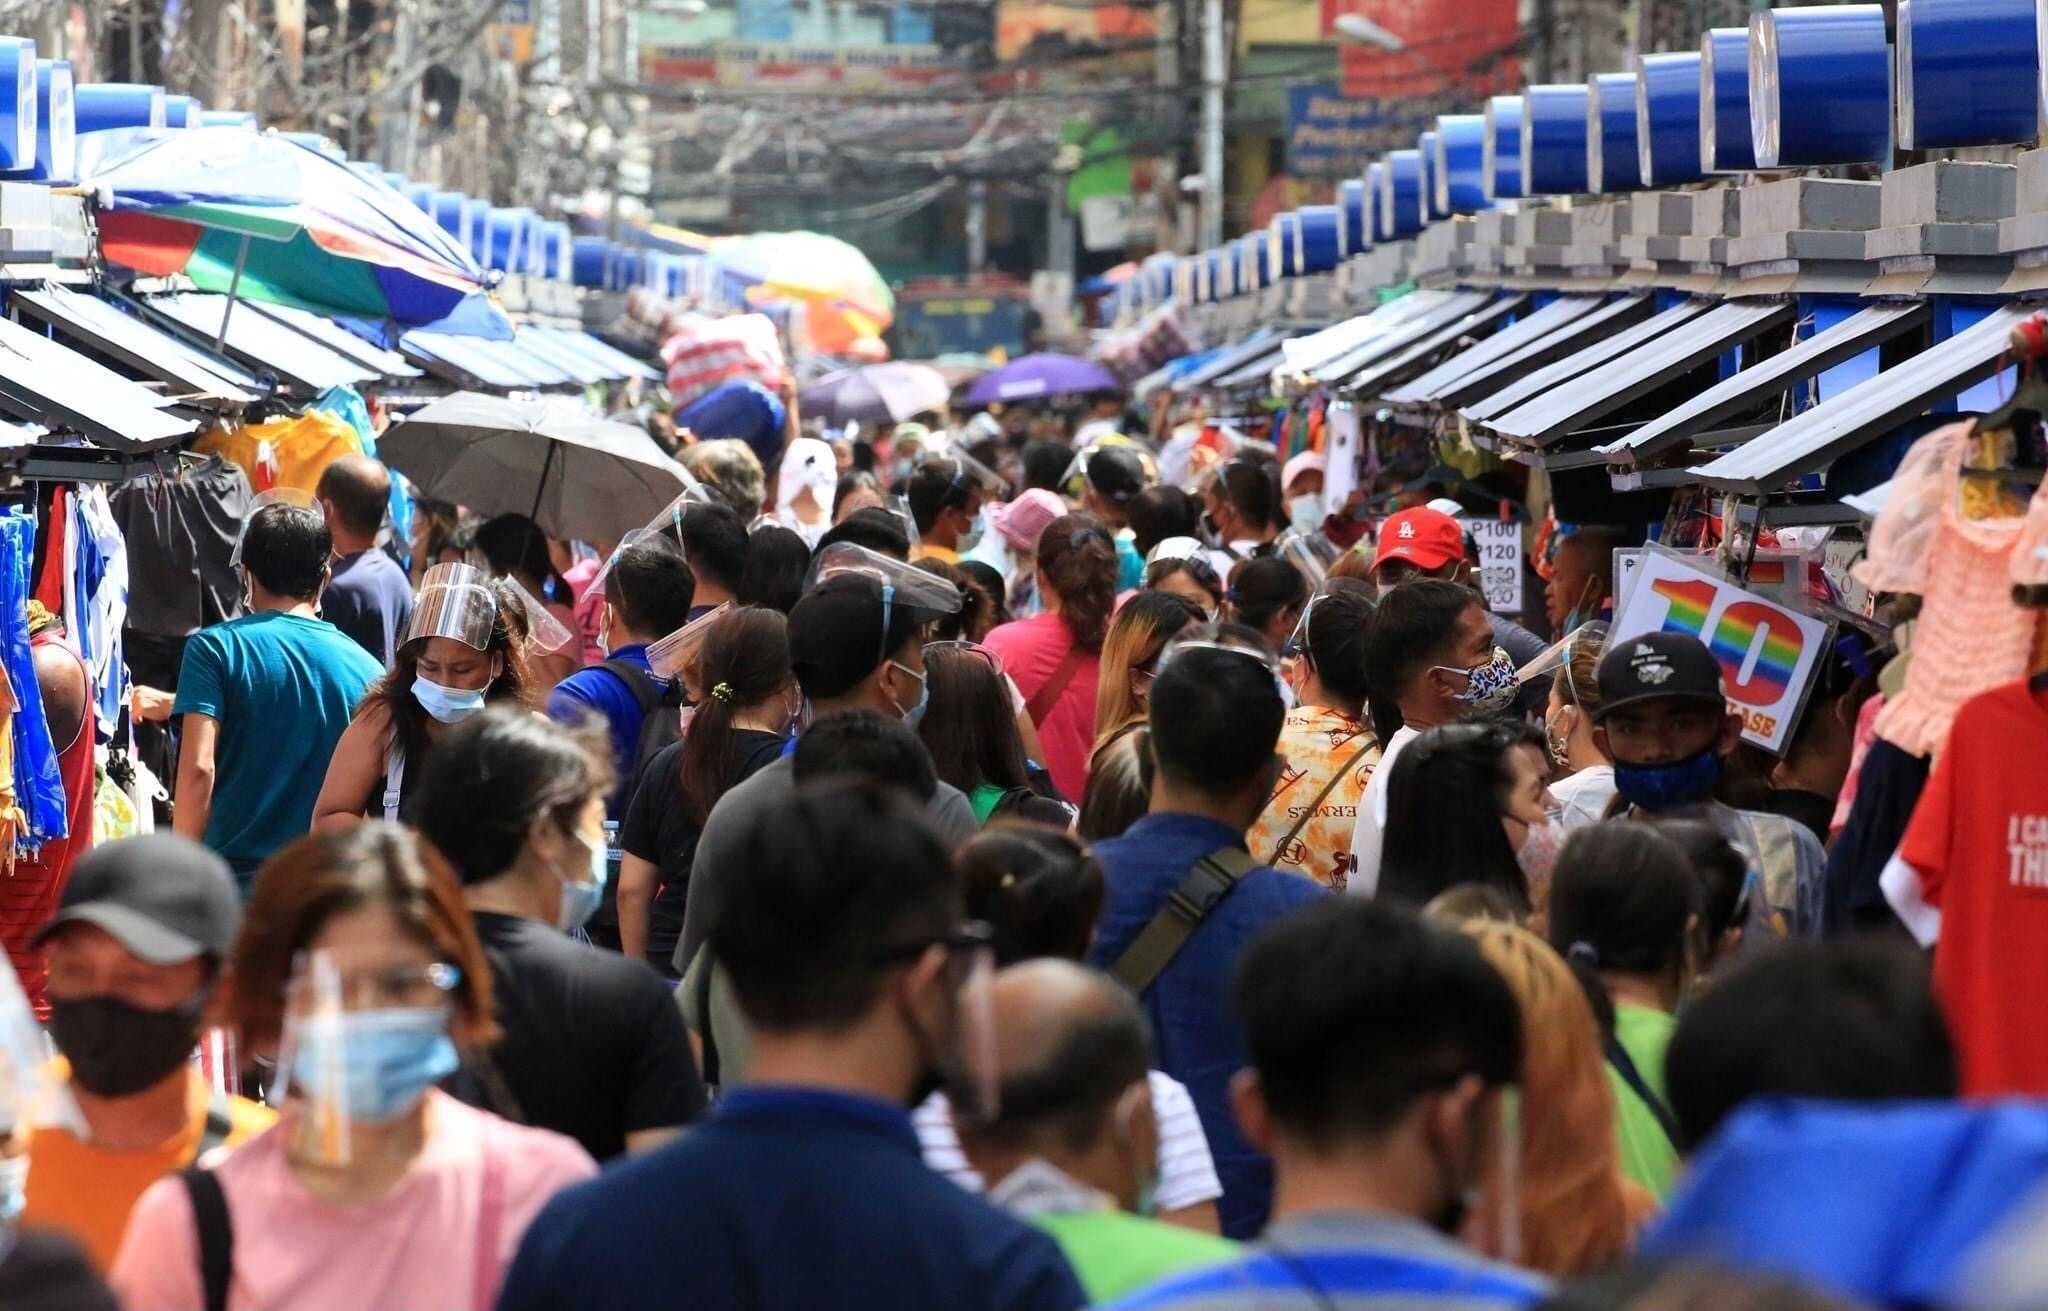 No vendor displaced in Divisoria mall, Manila LGU says